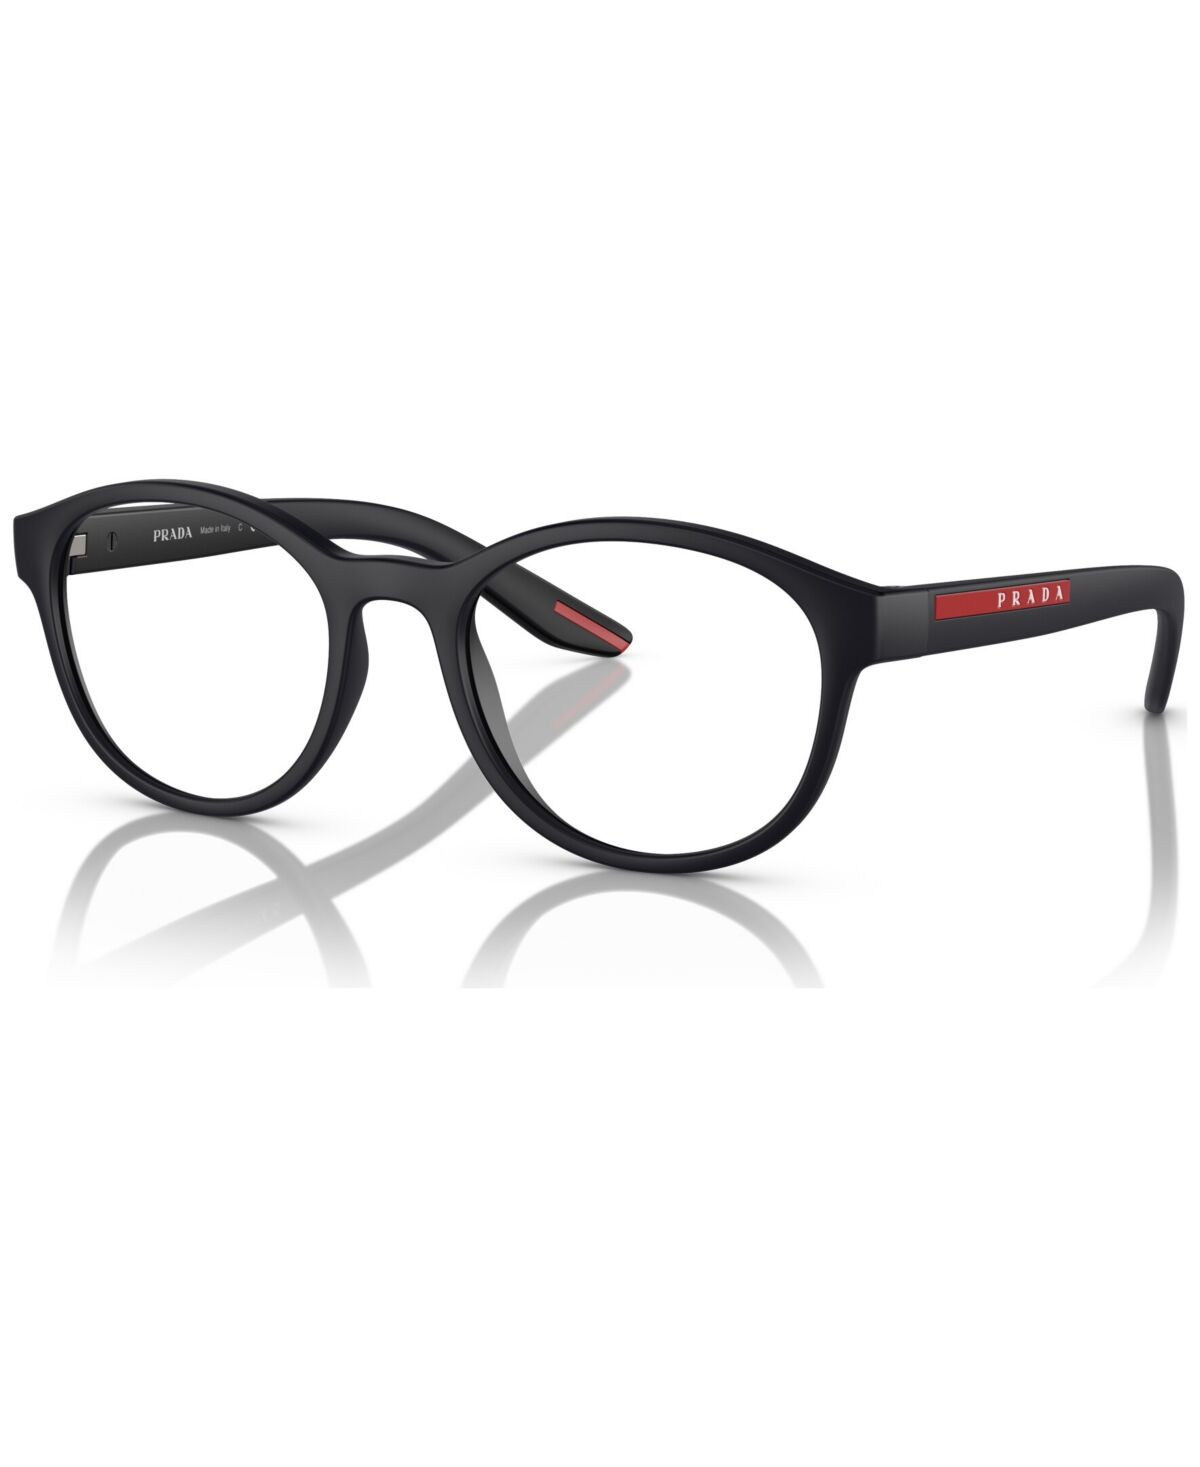 Prada Linea Rossa Men's Eyeglasses, Ps 07PV 53 - Black Rubber